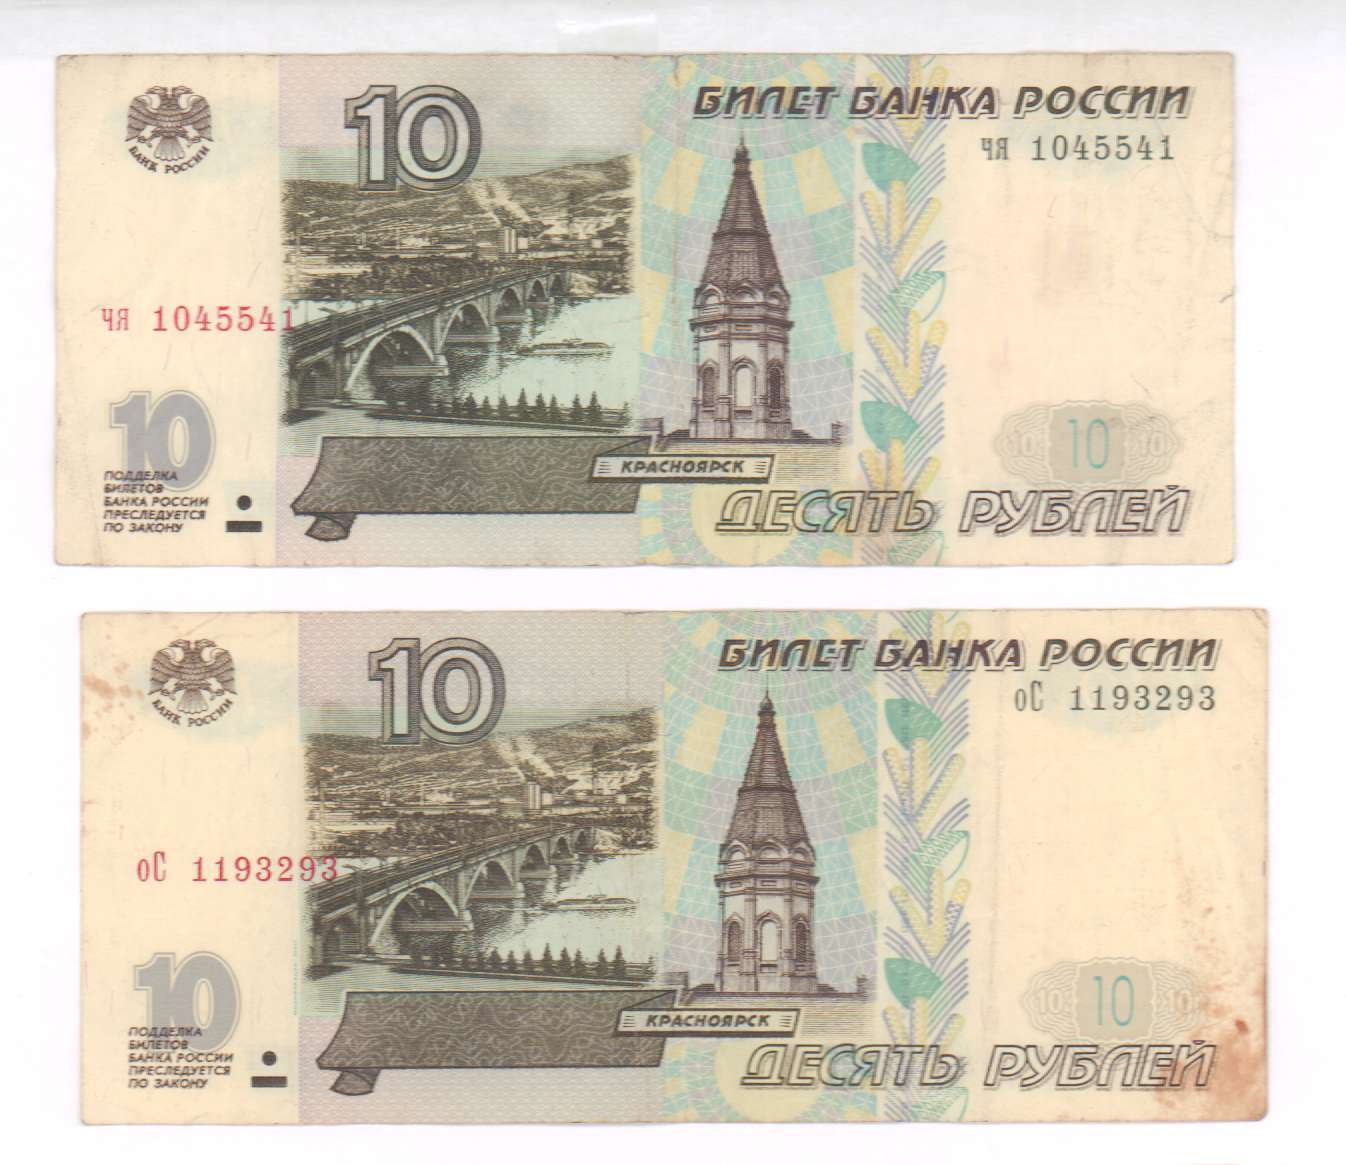 Бумажные 10 руб 1997